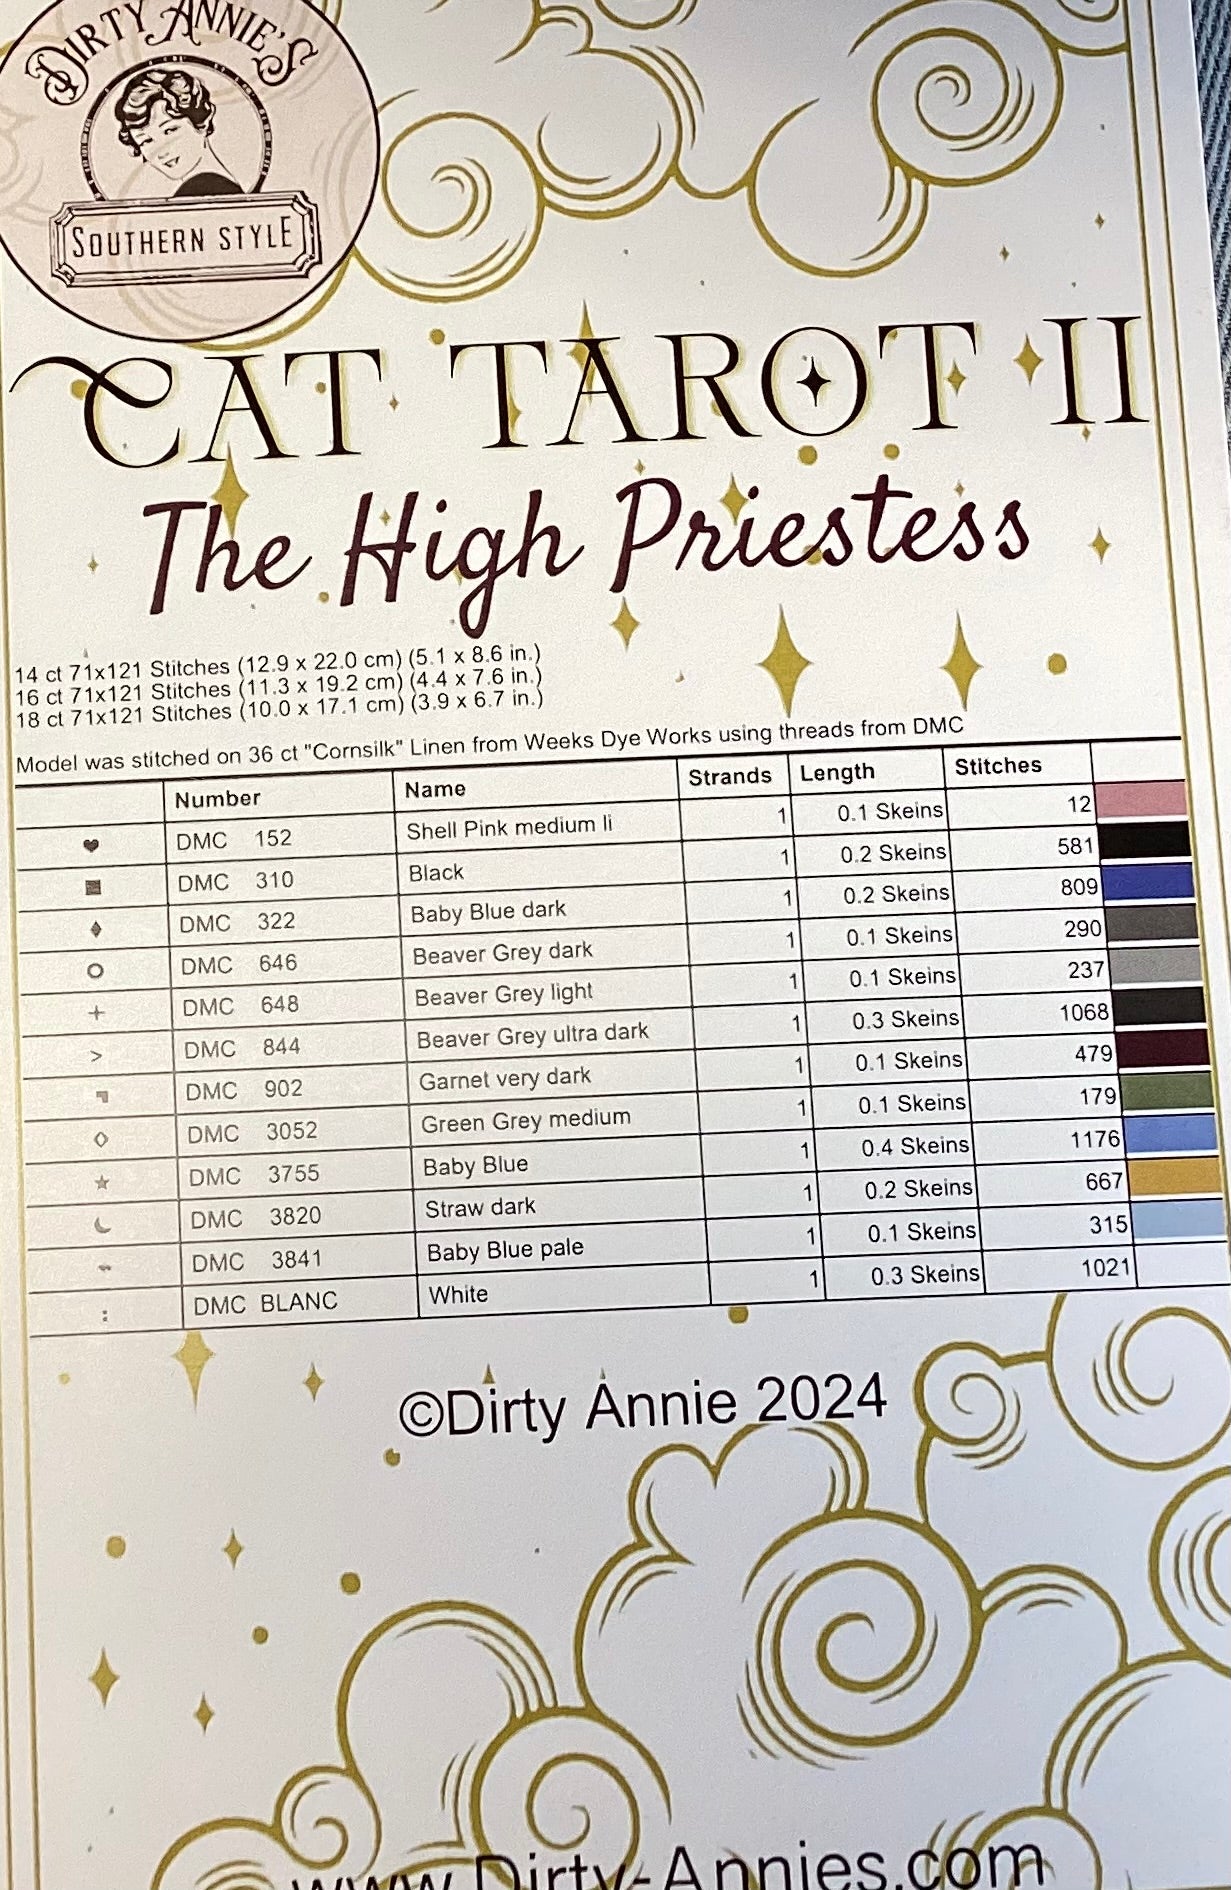 The High Priestess: Cat Tarot II By Dirty Annie's